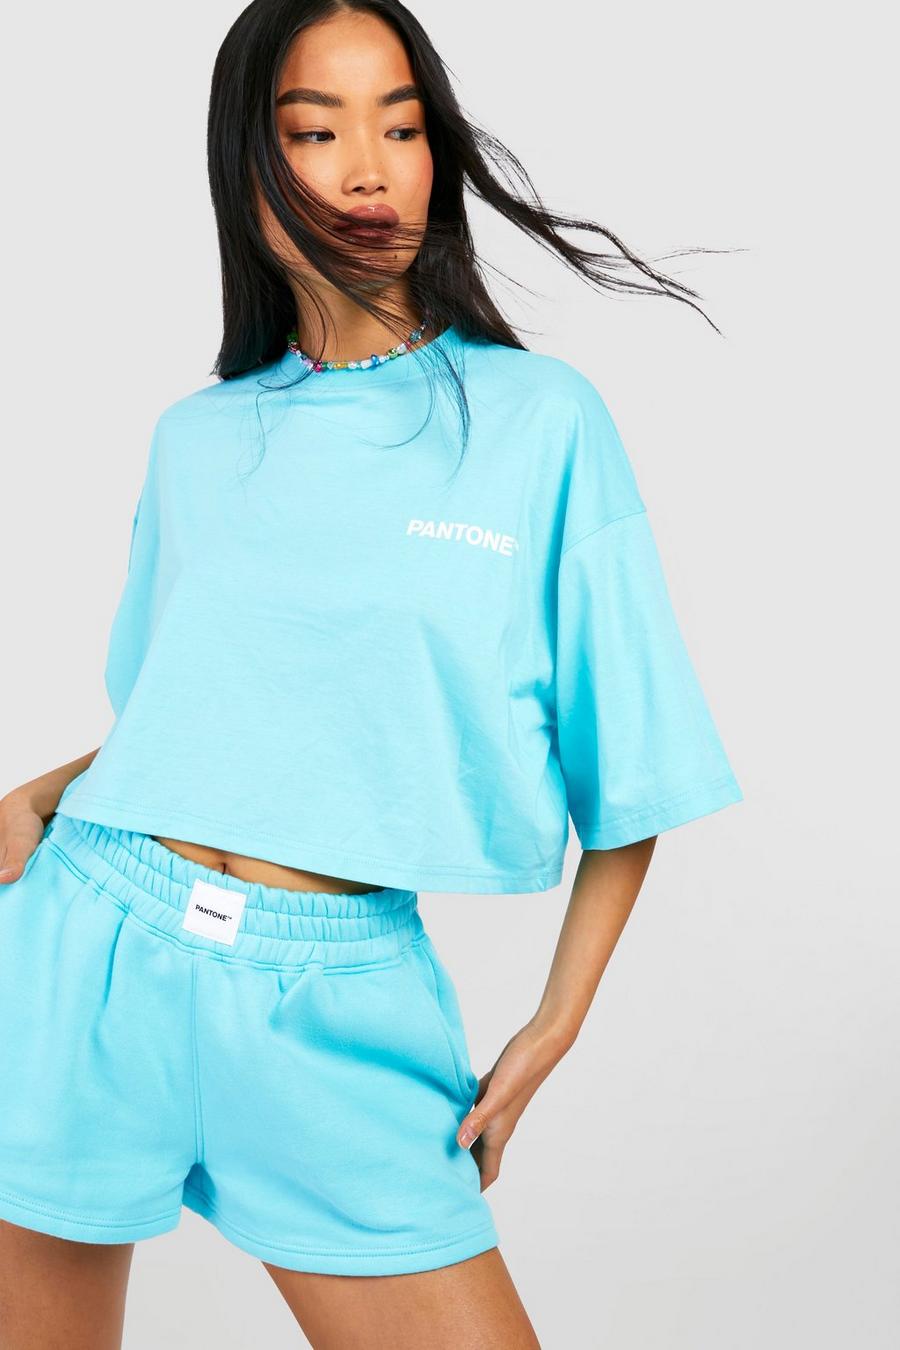 Aqua Pantone Kort oversize t-shirt image number 1